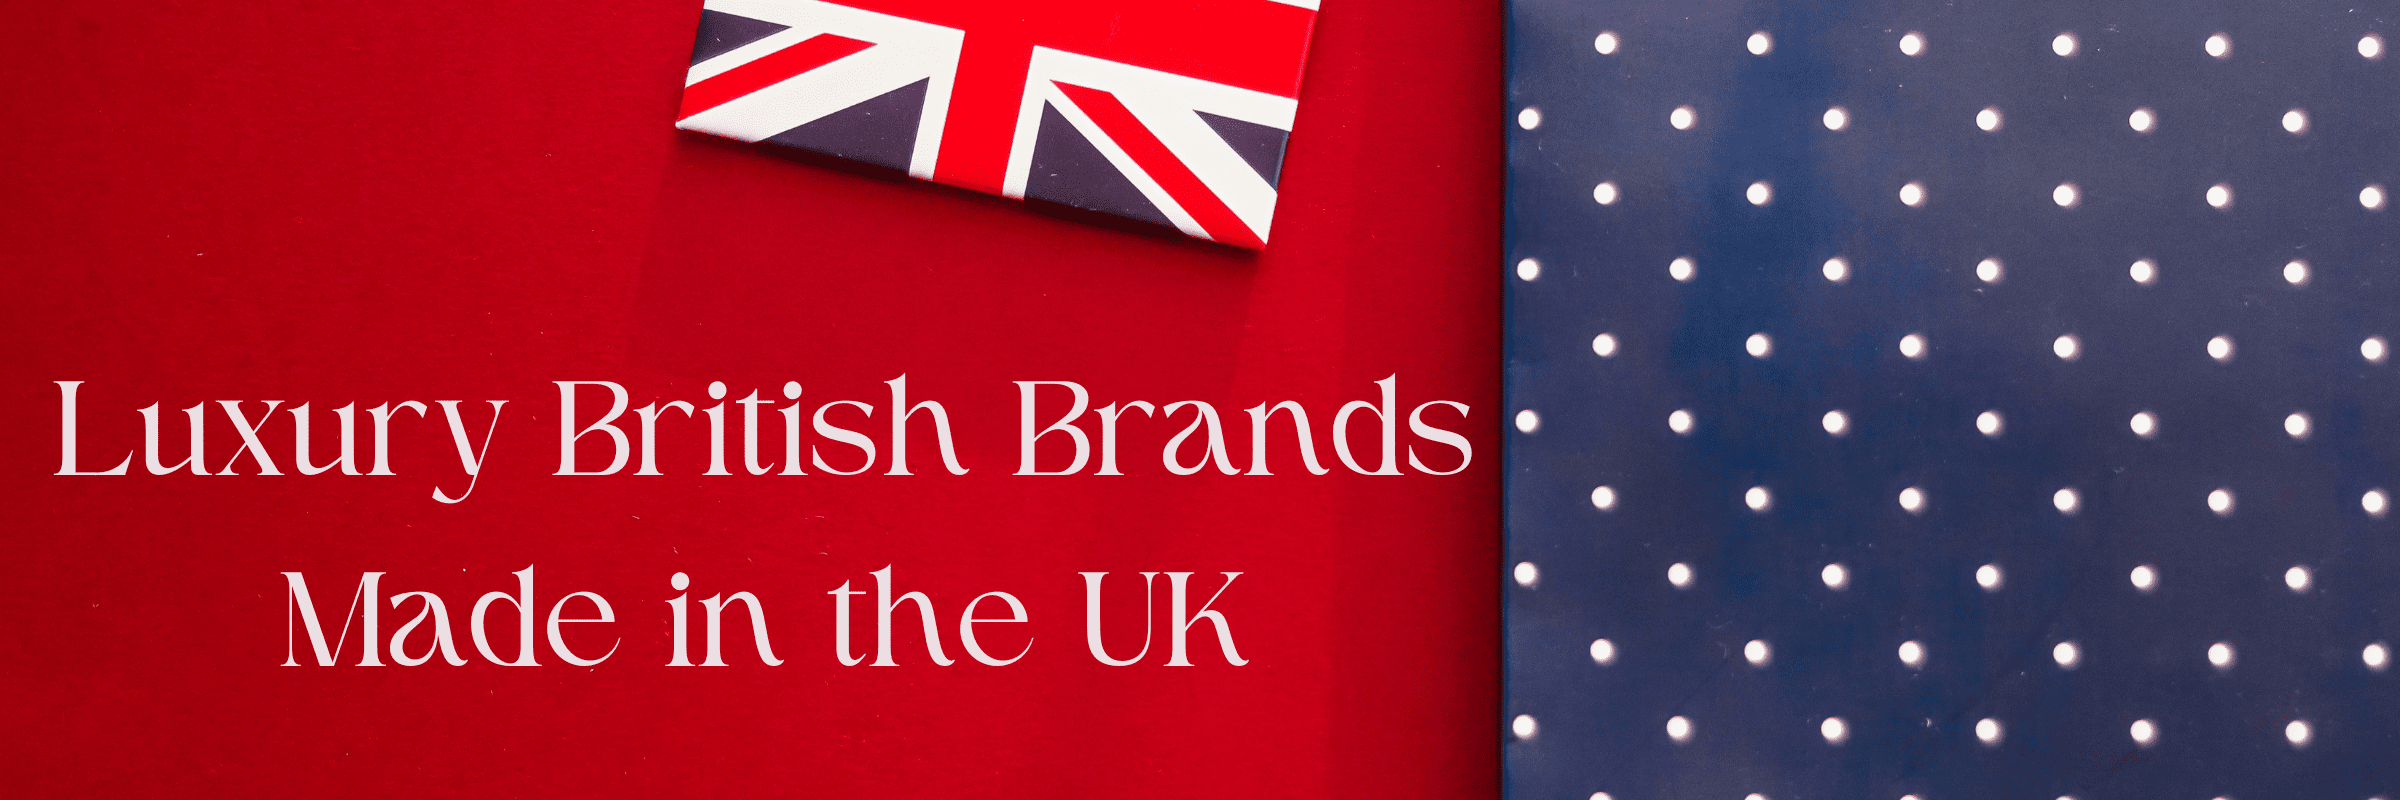 Luxury British Brands Made in the UK